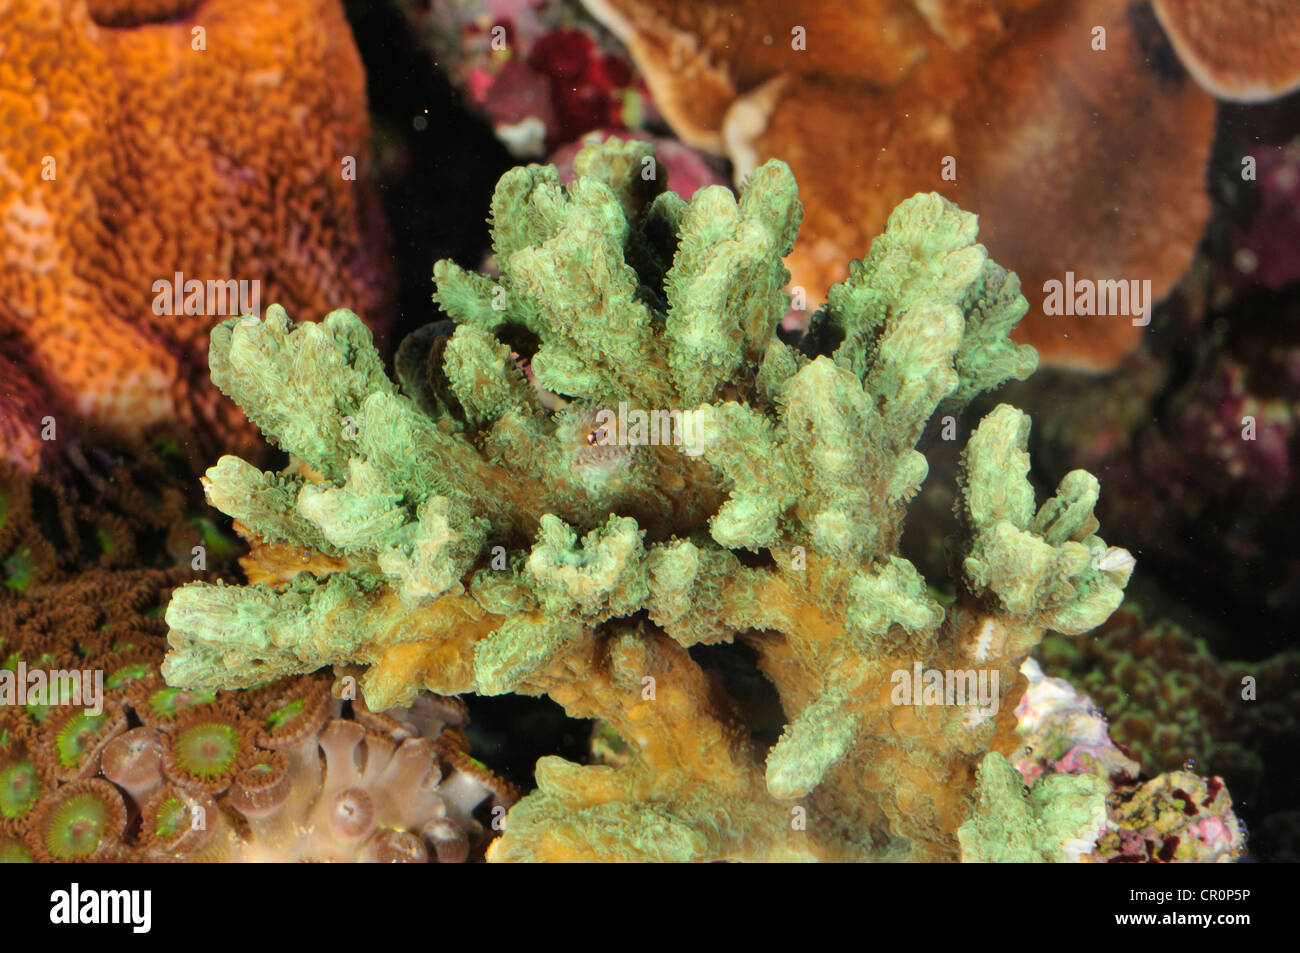 Acropora sp., hard coral, Acropridae, Celentata, indo-pacific Ocean Stock Photo